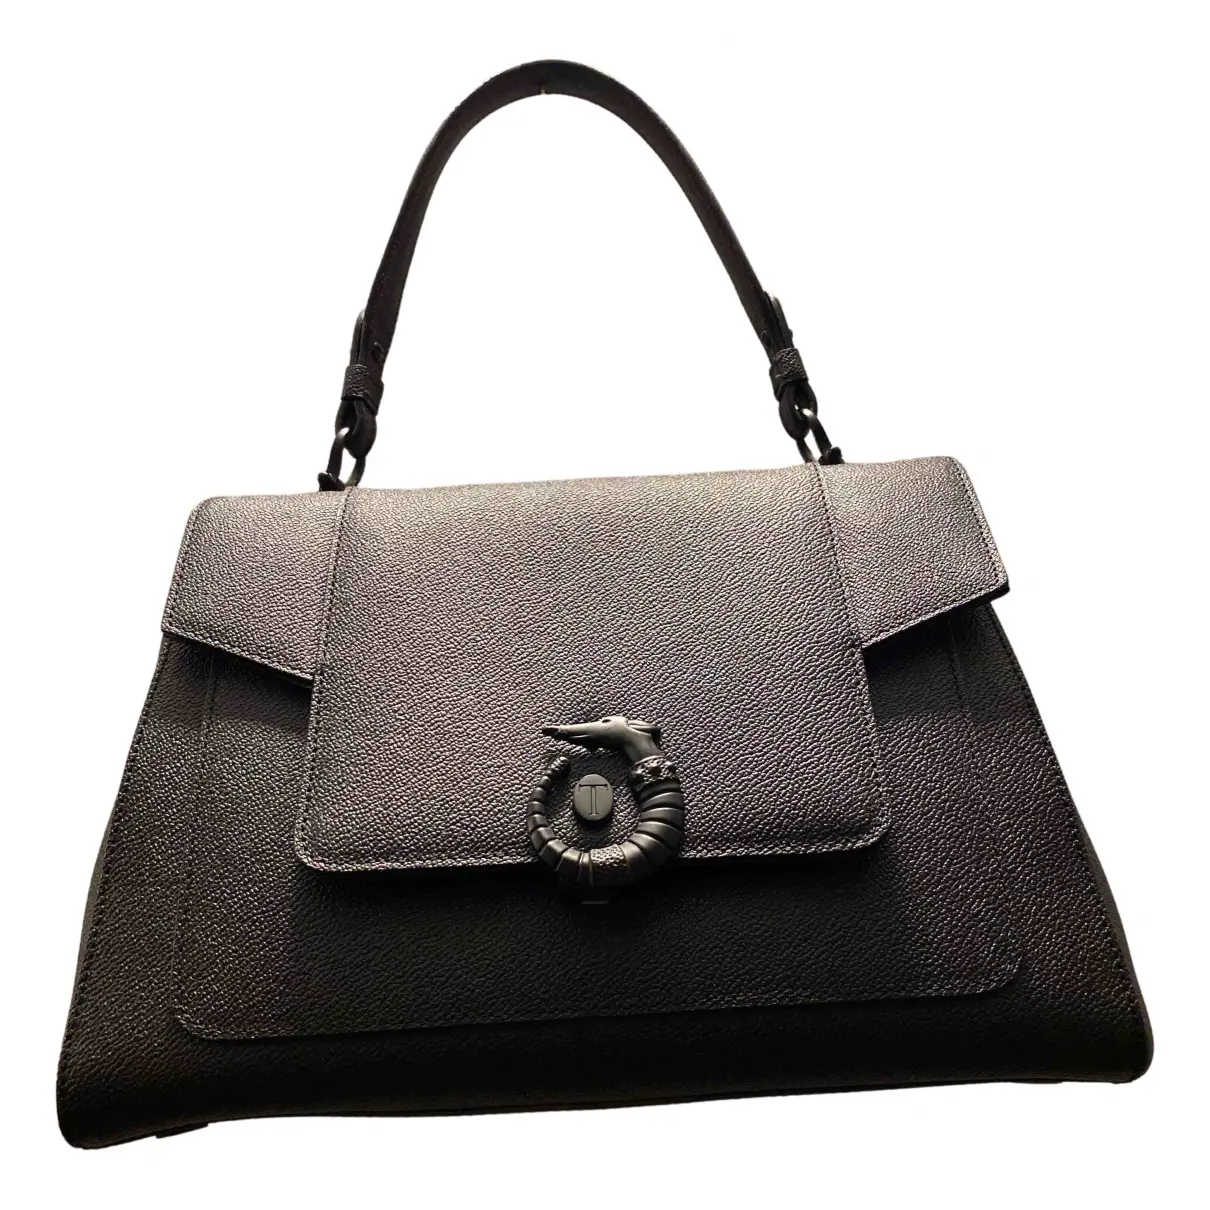 Leather handbag Trussardi